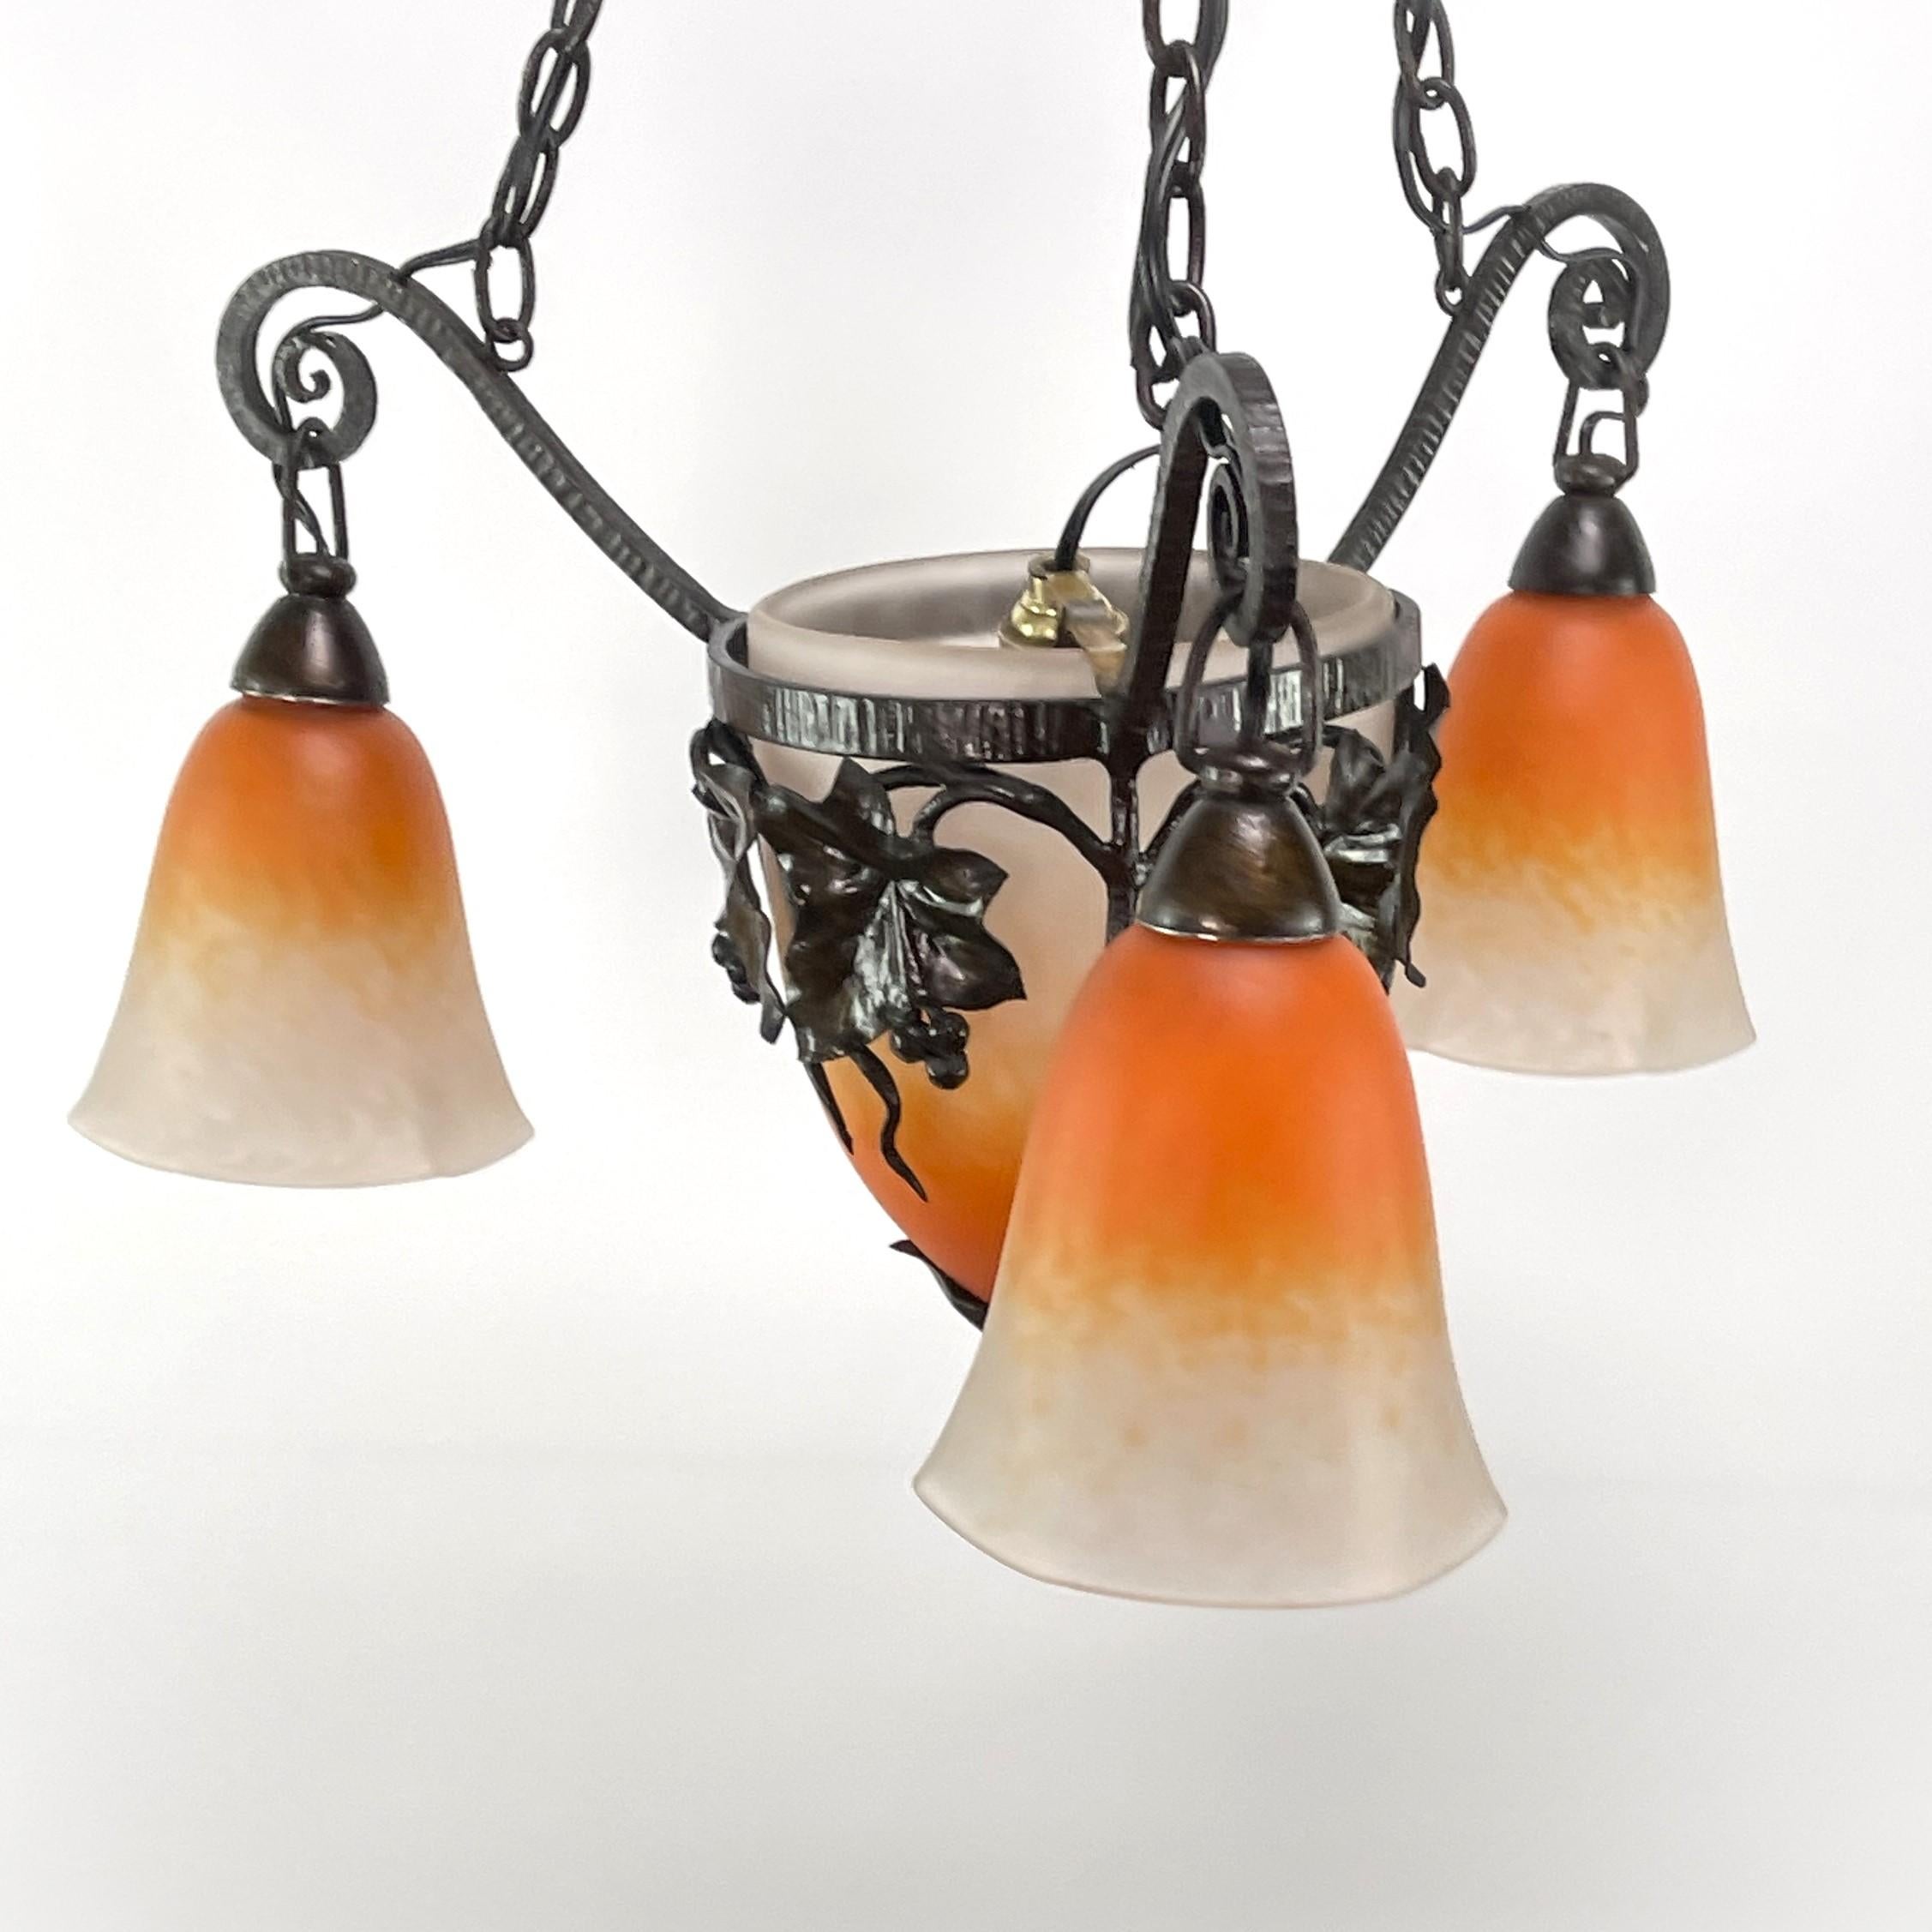 Art Deco Pate De Verre Ceiling Lamp by Schneider, 1930s For Sale 3